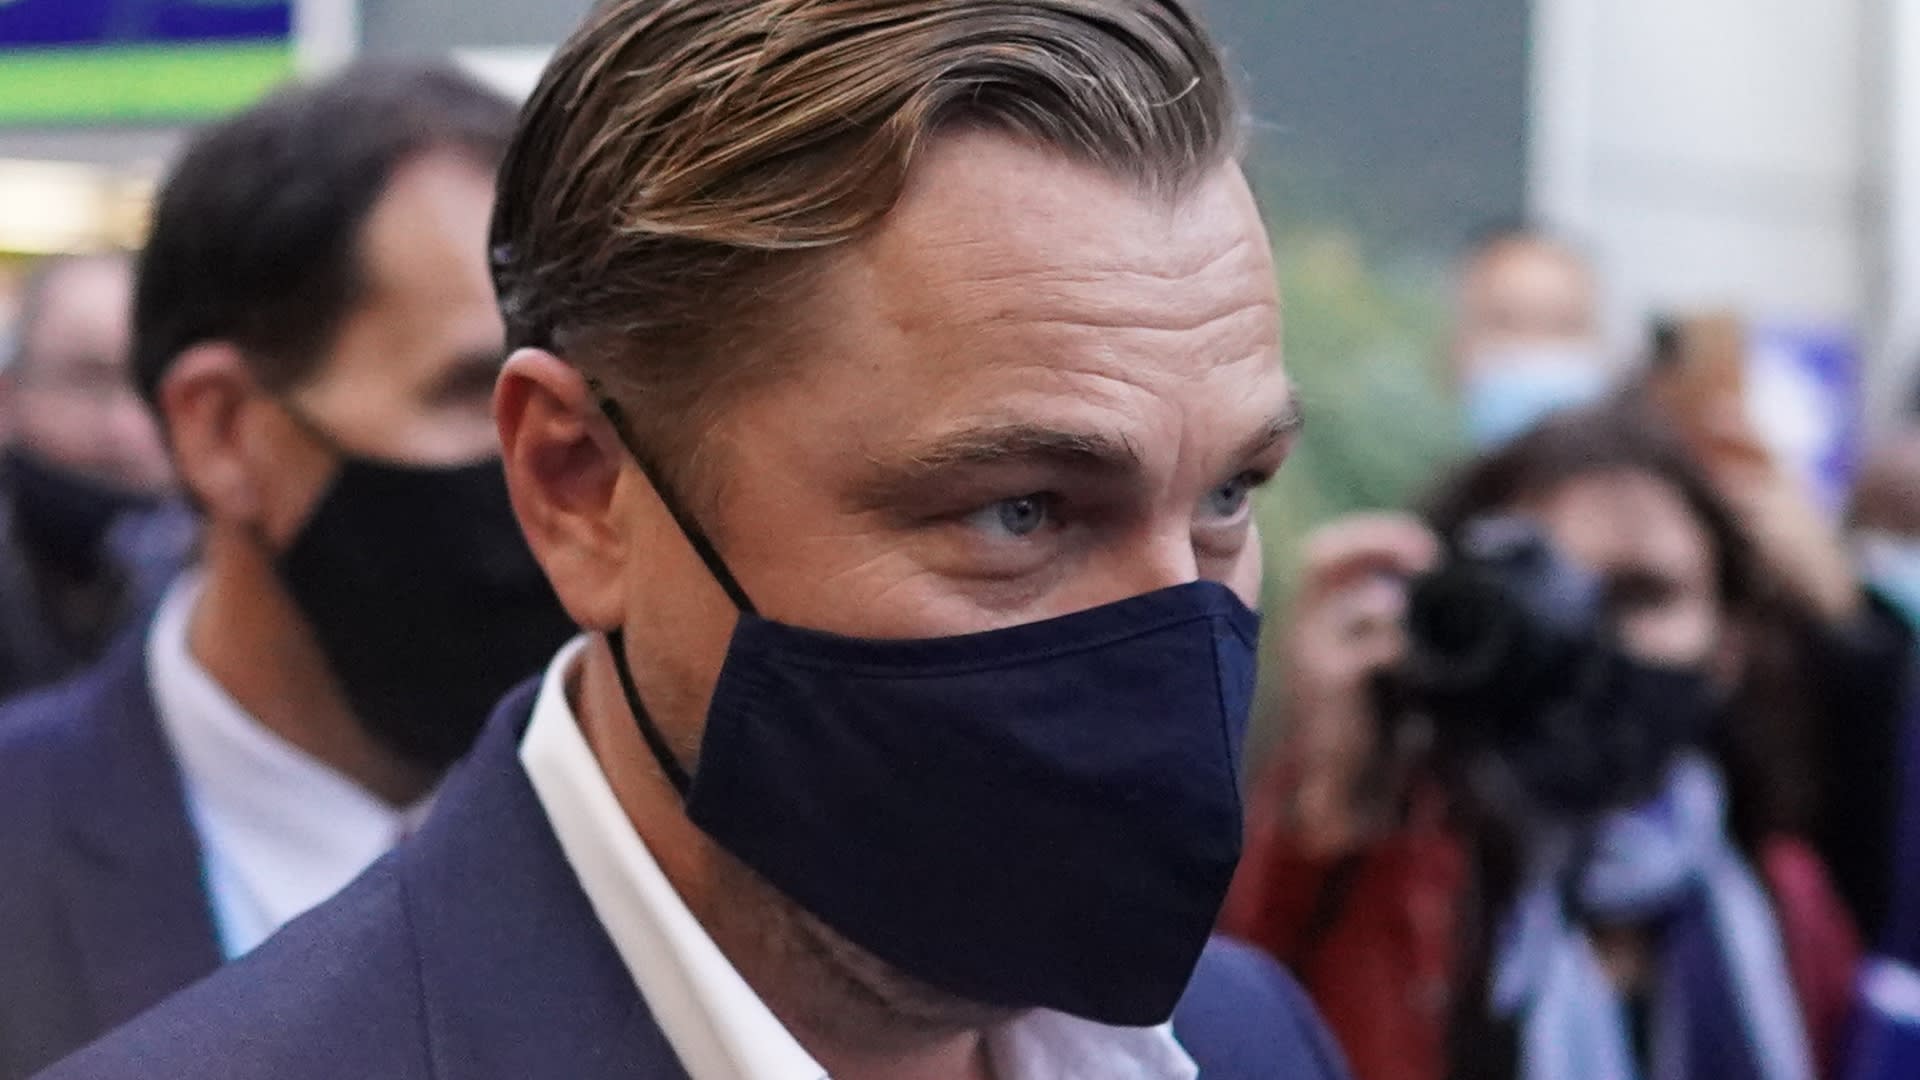 Konference COP26 se zúčastnil i herec a environmentální aktivista Leonardo DiCaprio